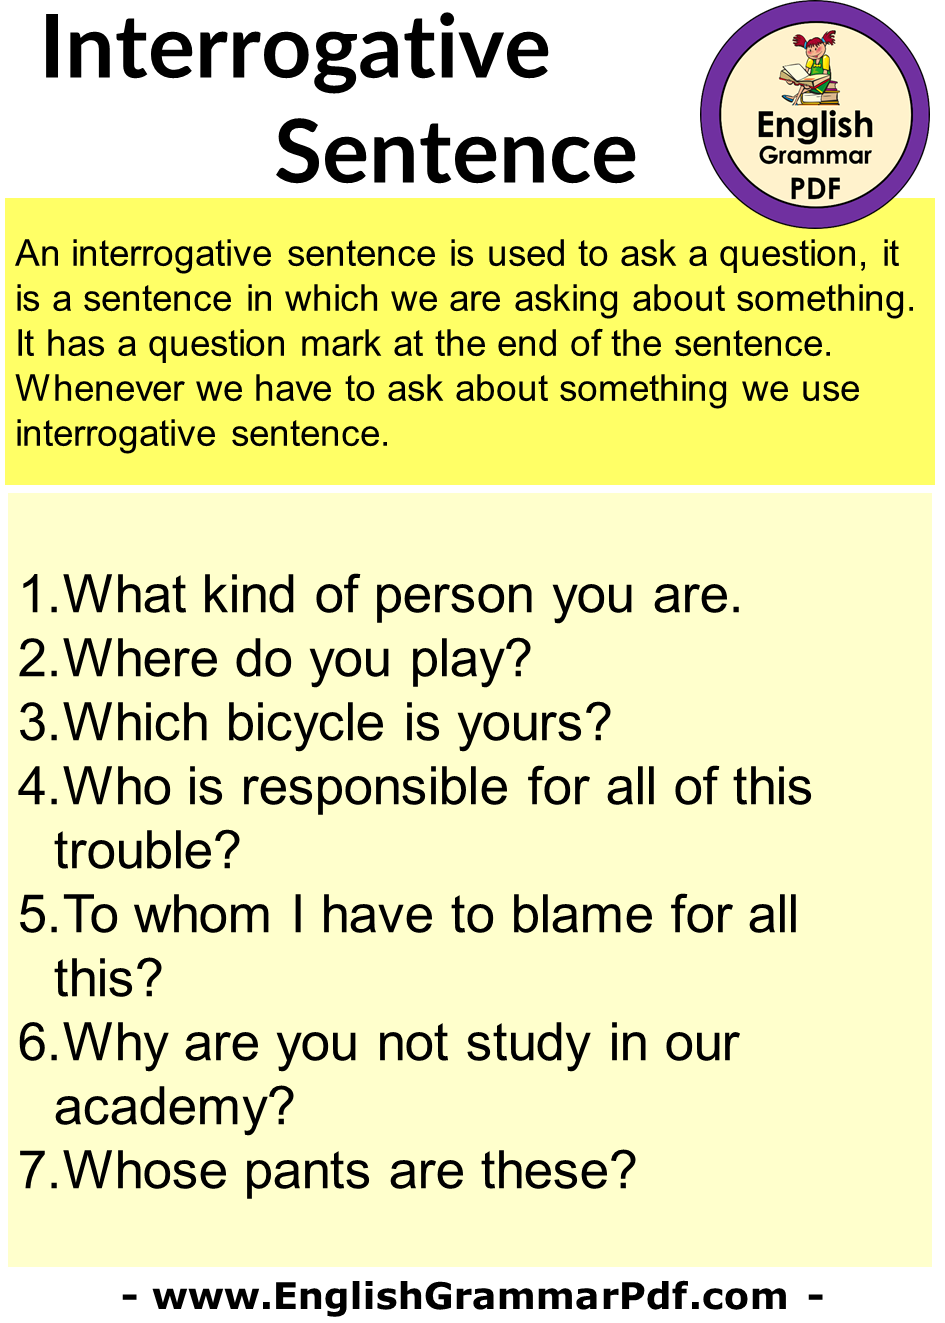 7 examples of interrogative sentences